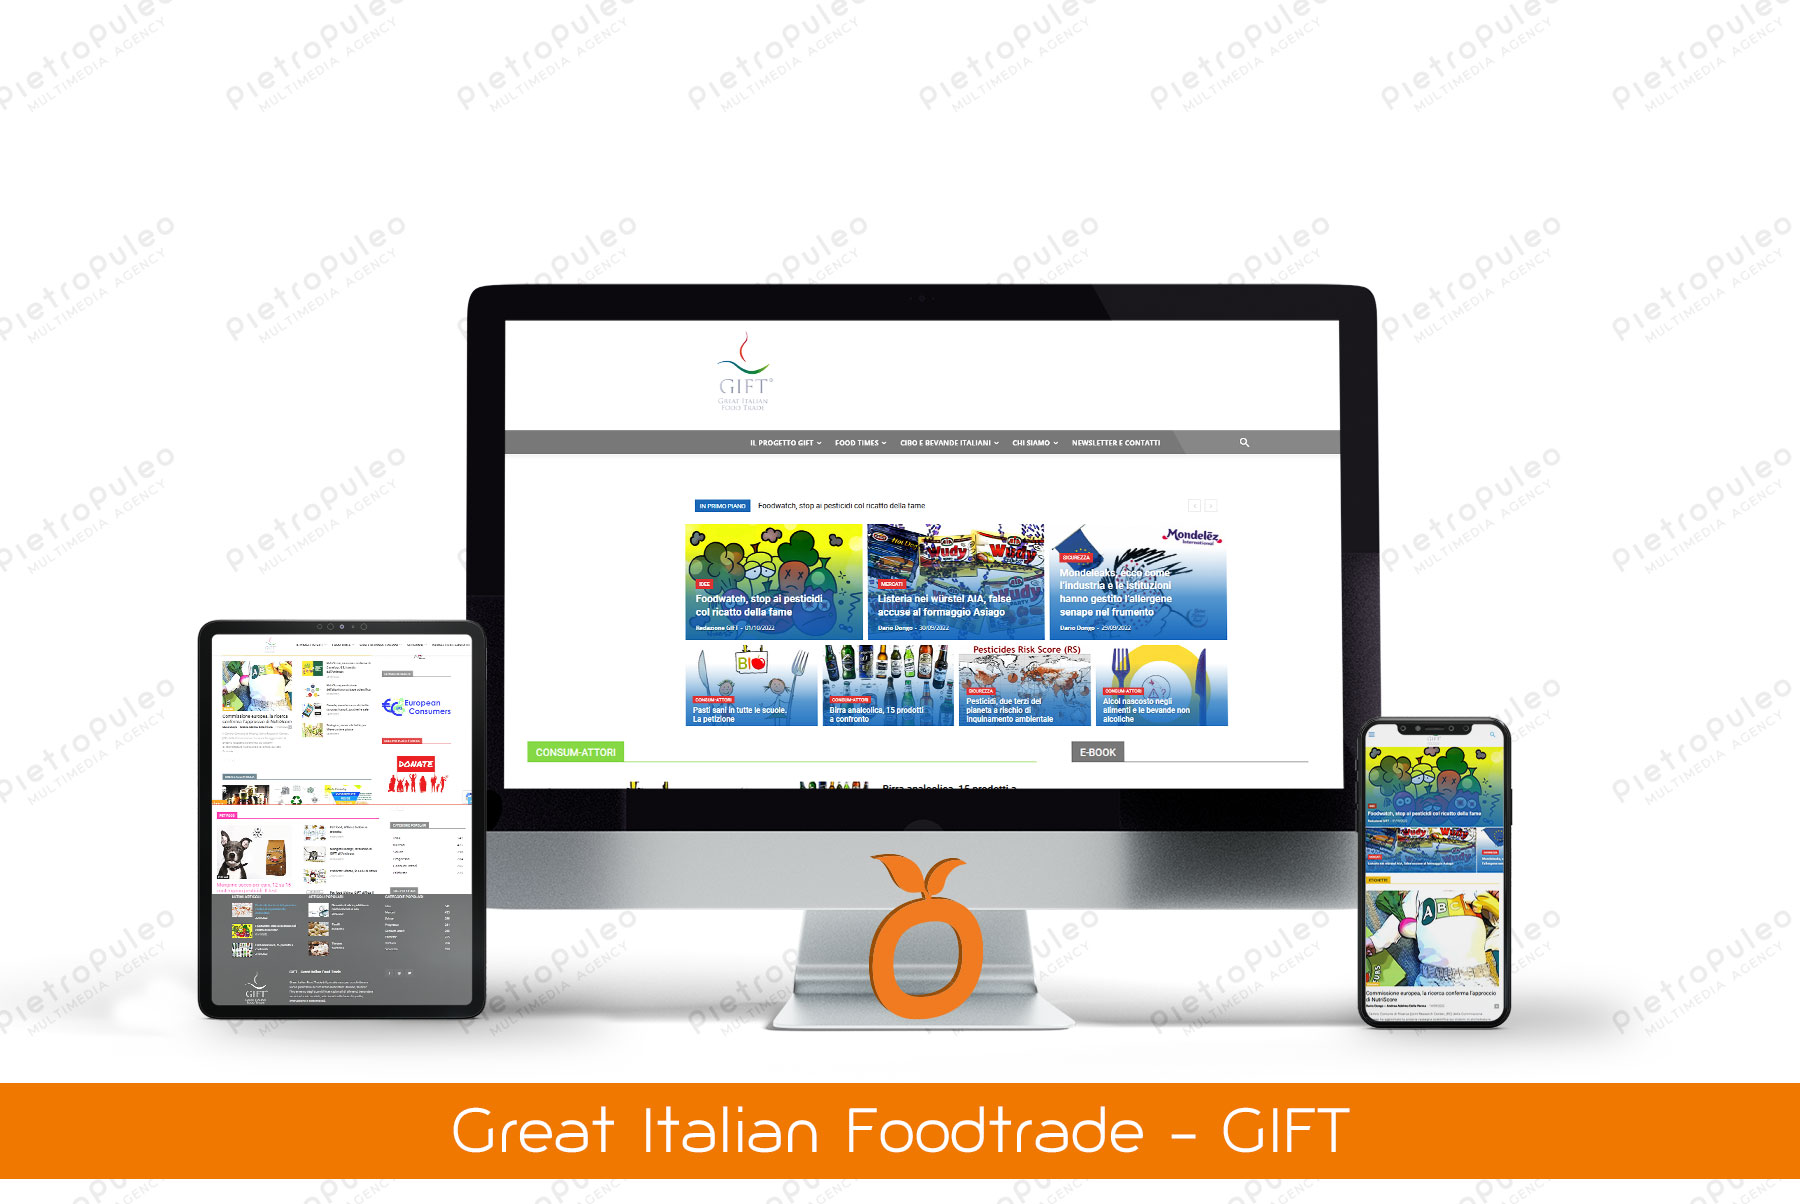 Great Italian Foodtrade - GIFT